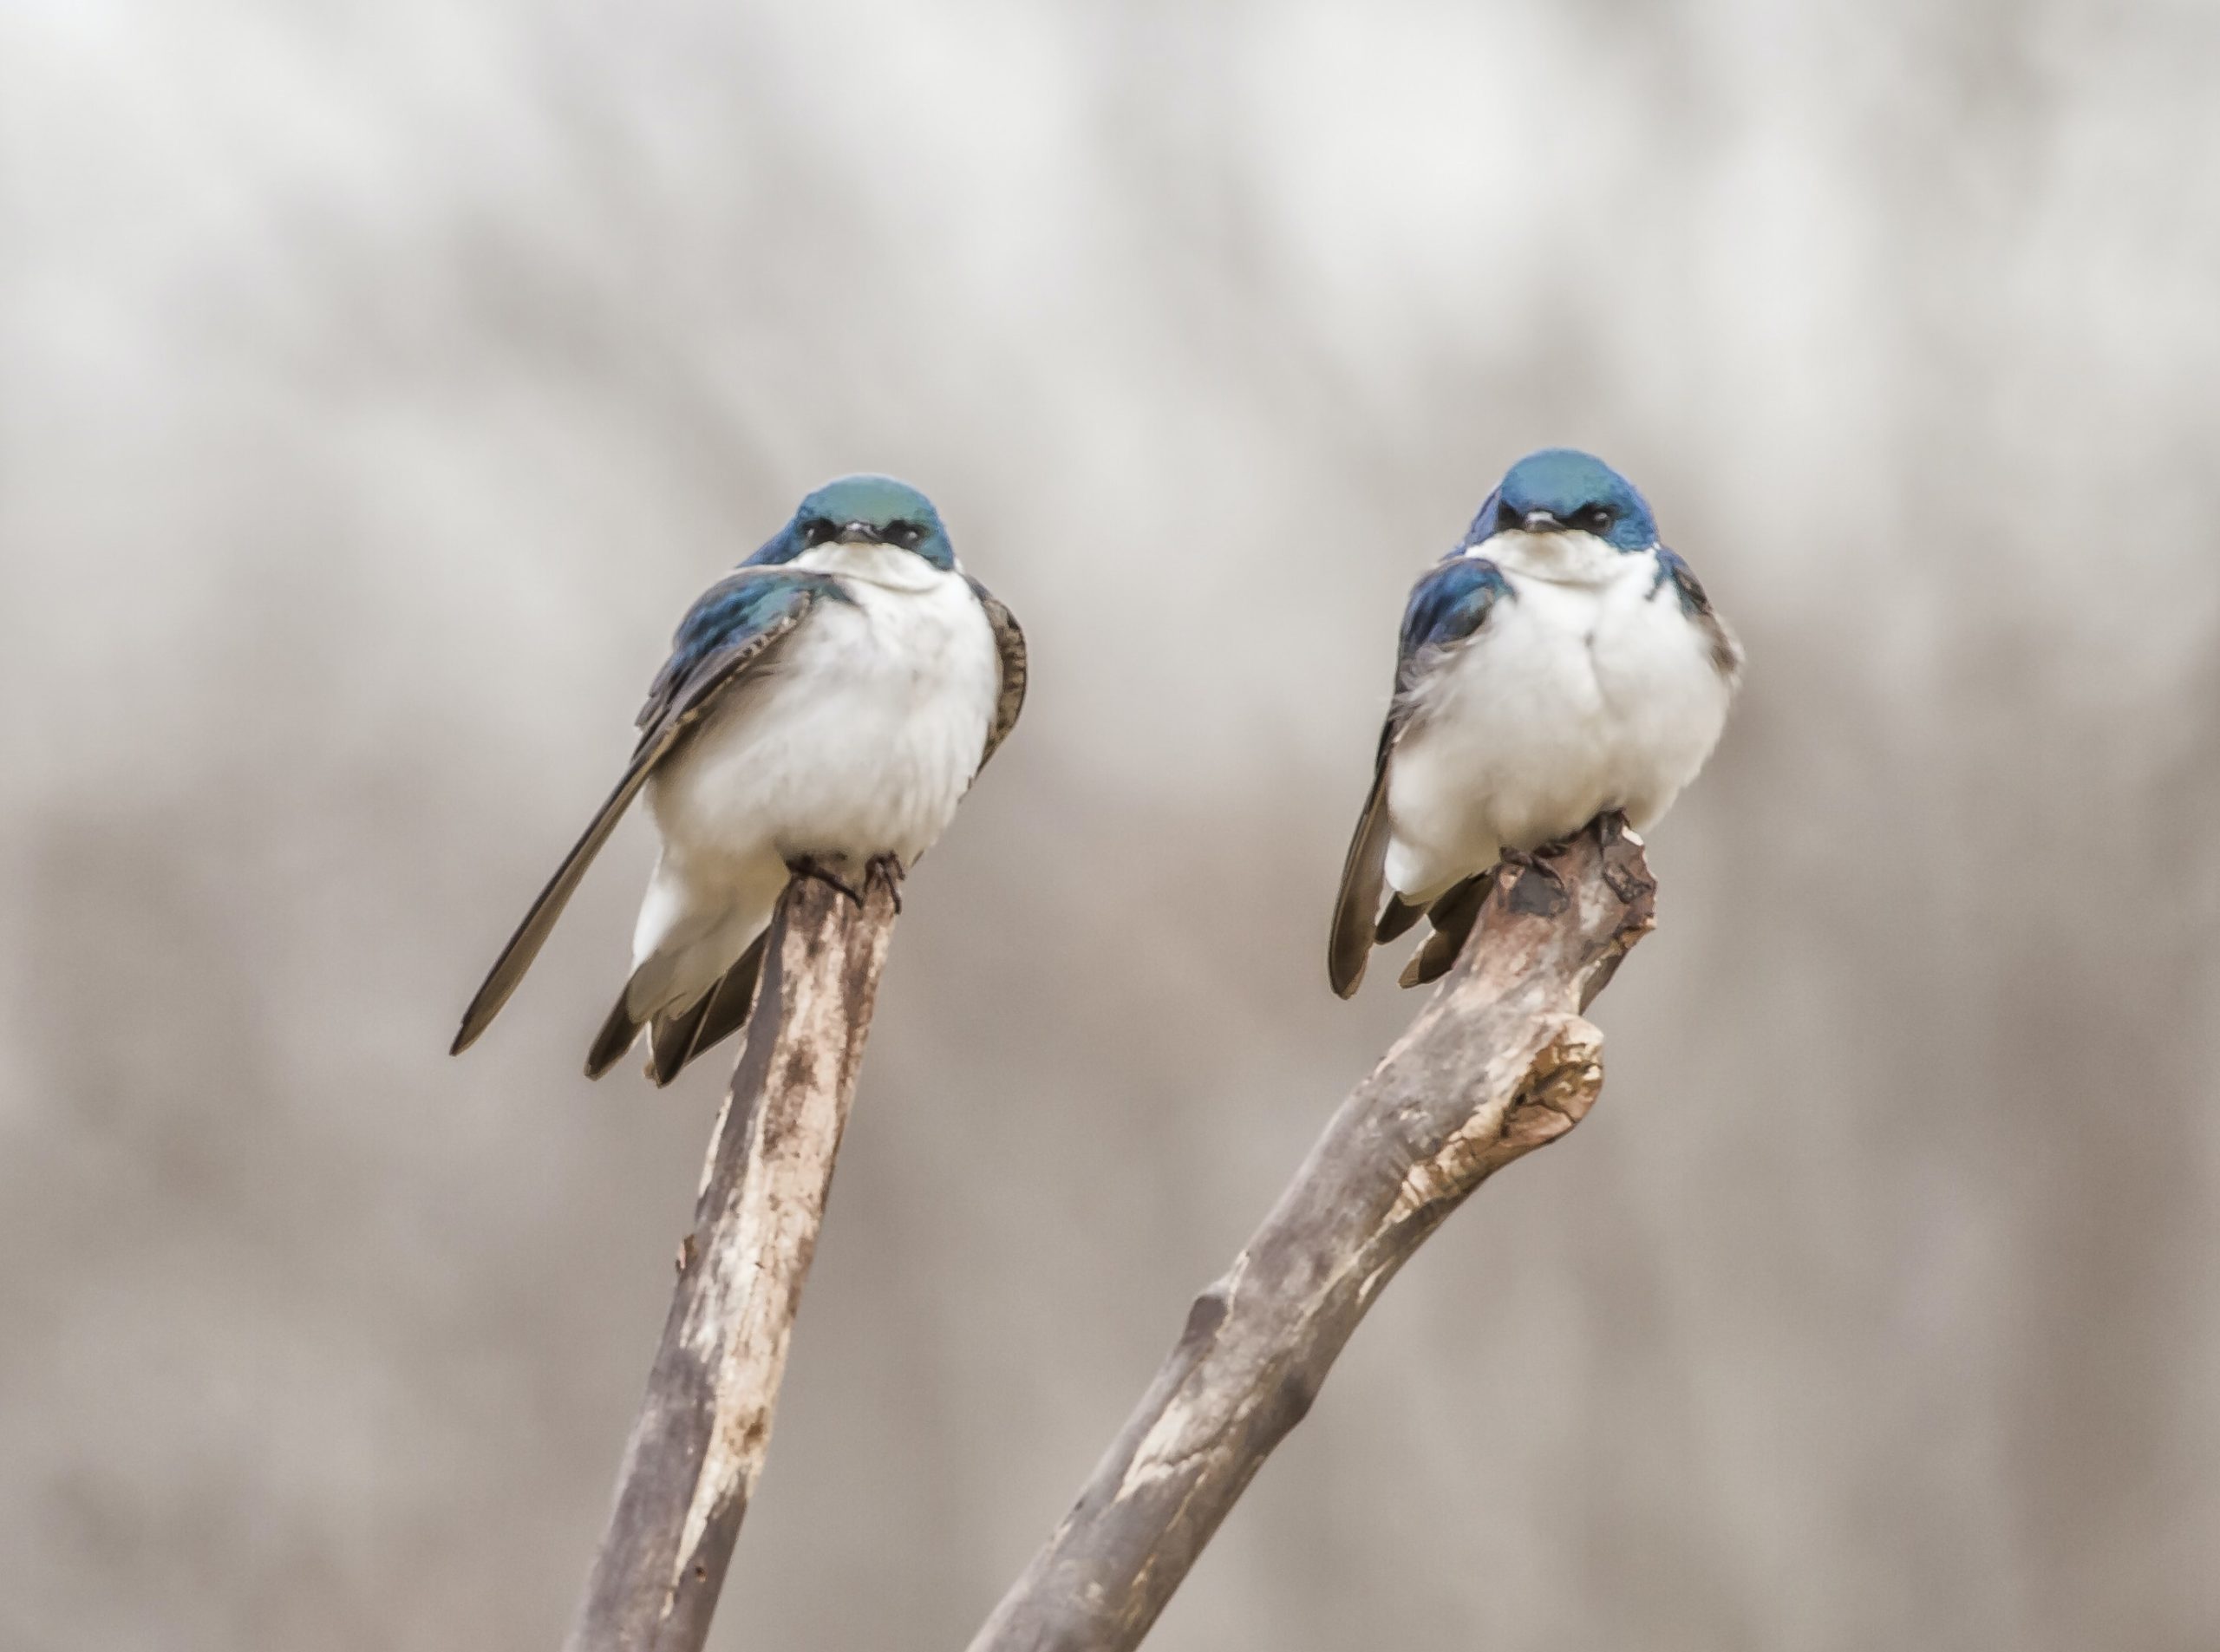 Channel Island Song Sparrow Spotlight: Rare Bird Awareness